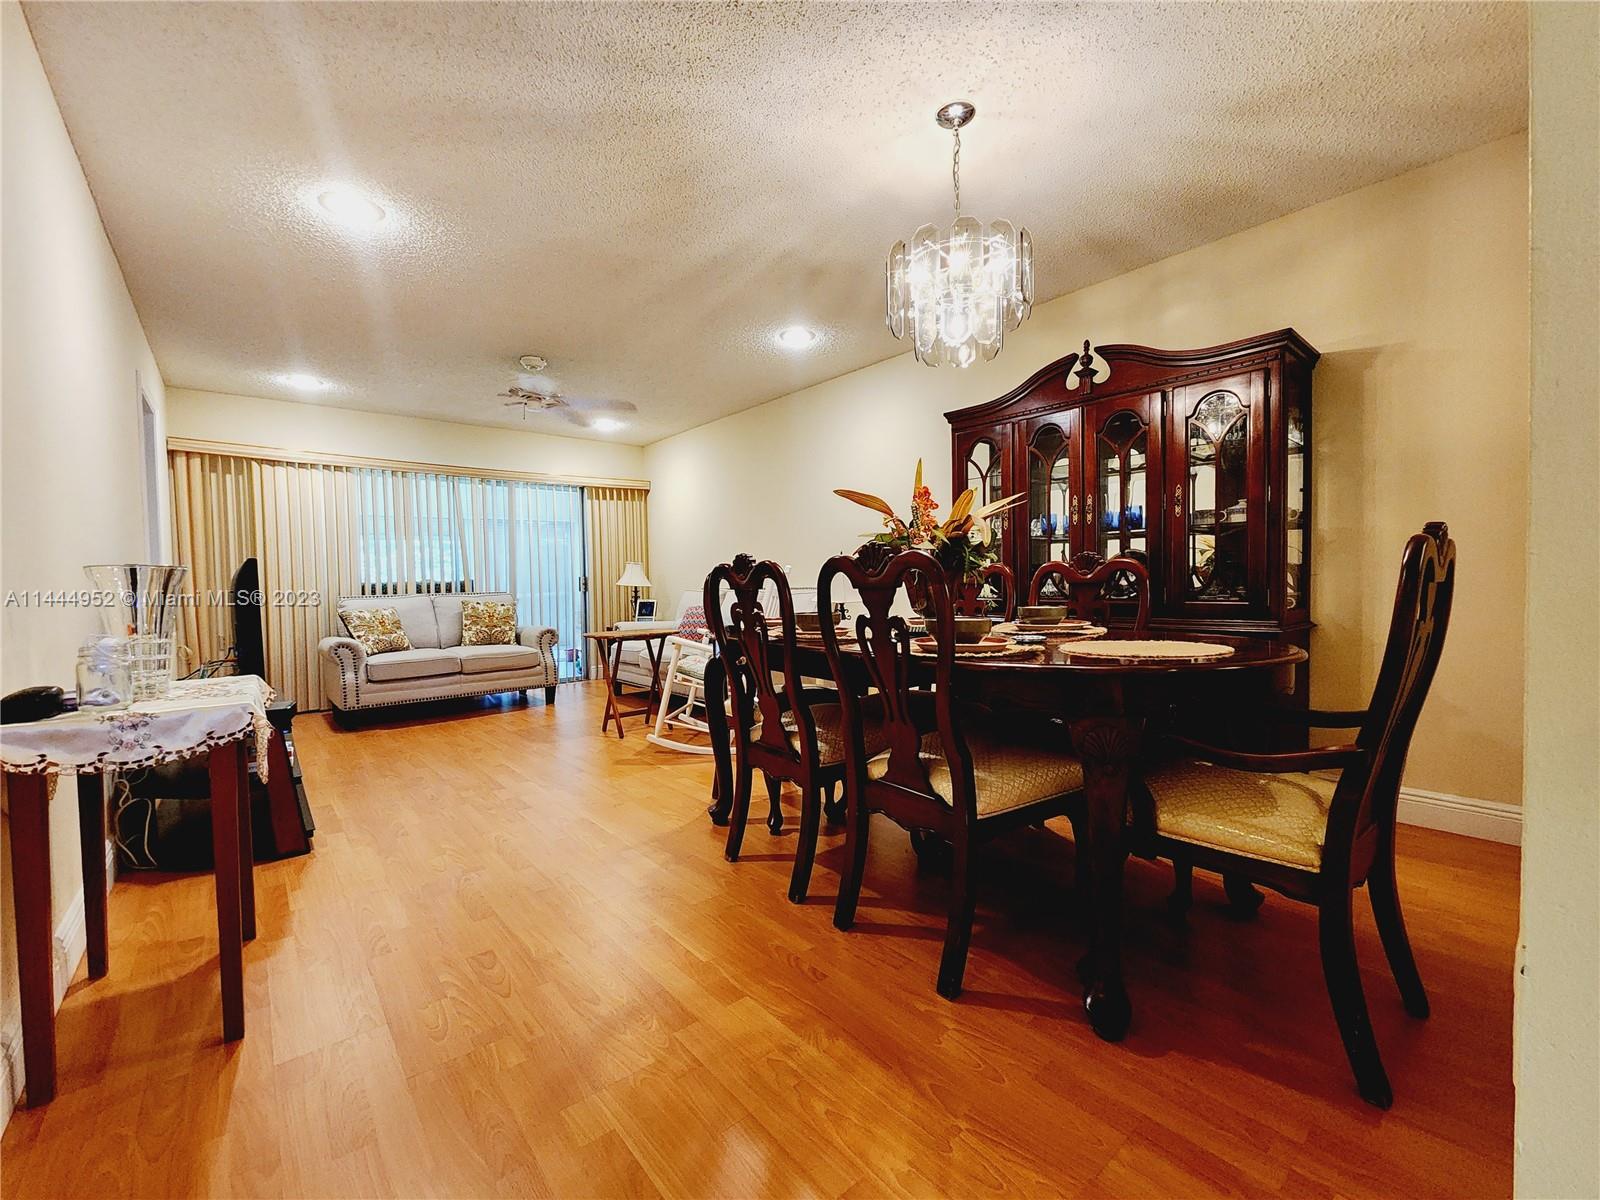 Property for Sale at 2703 Nassau Bnd Bnd C2, Coconut Creek, Broward County, Florida - Bedrooms: 2 
Bathrooms: 2  - $170,000